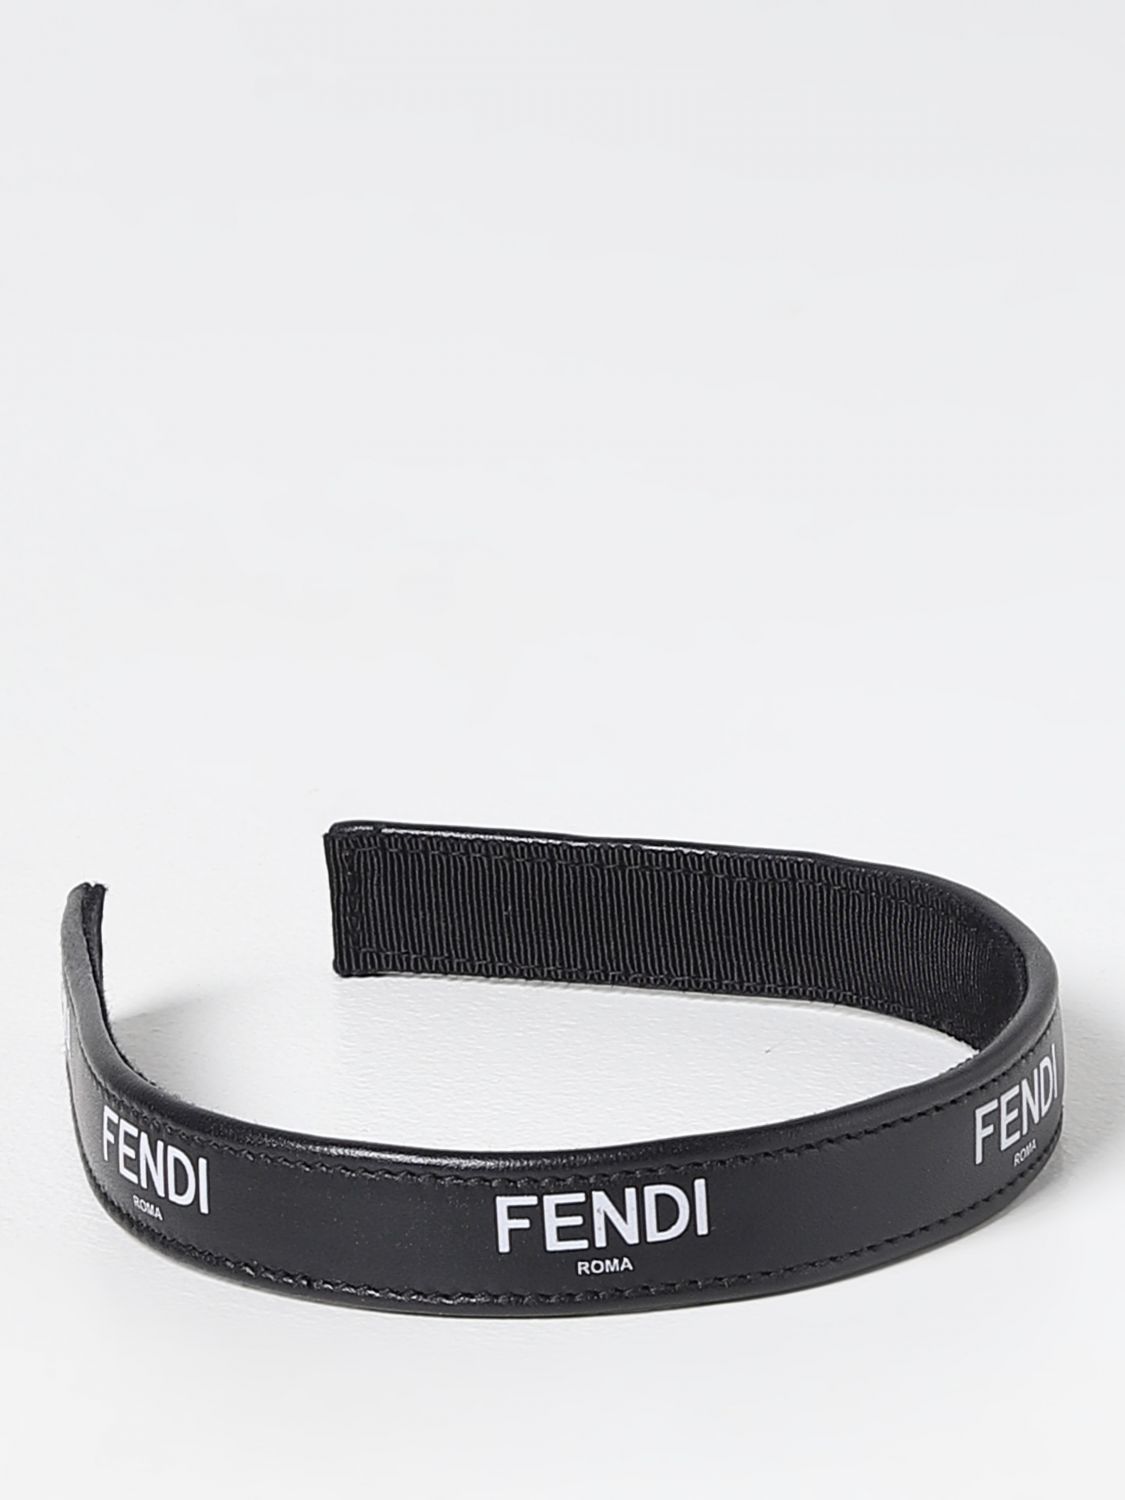 FENDI: leather headband with printed logo - Black | Fendi hairband ...